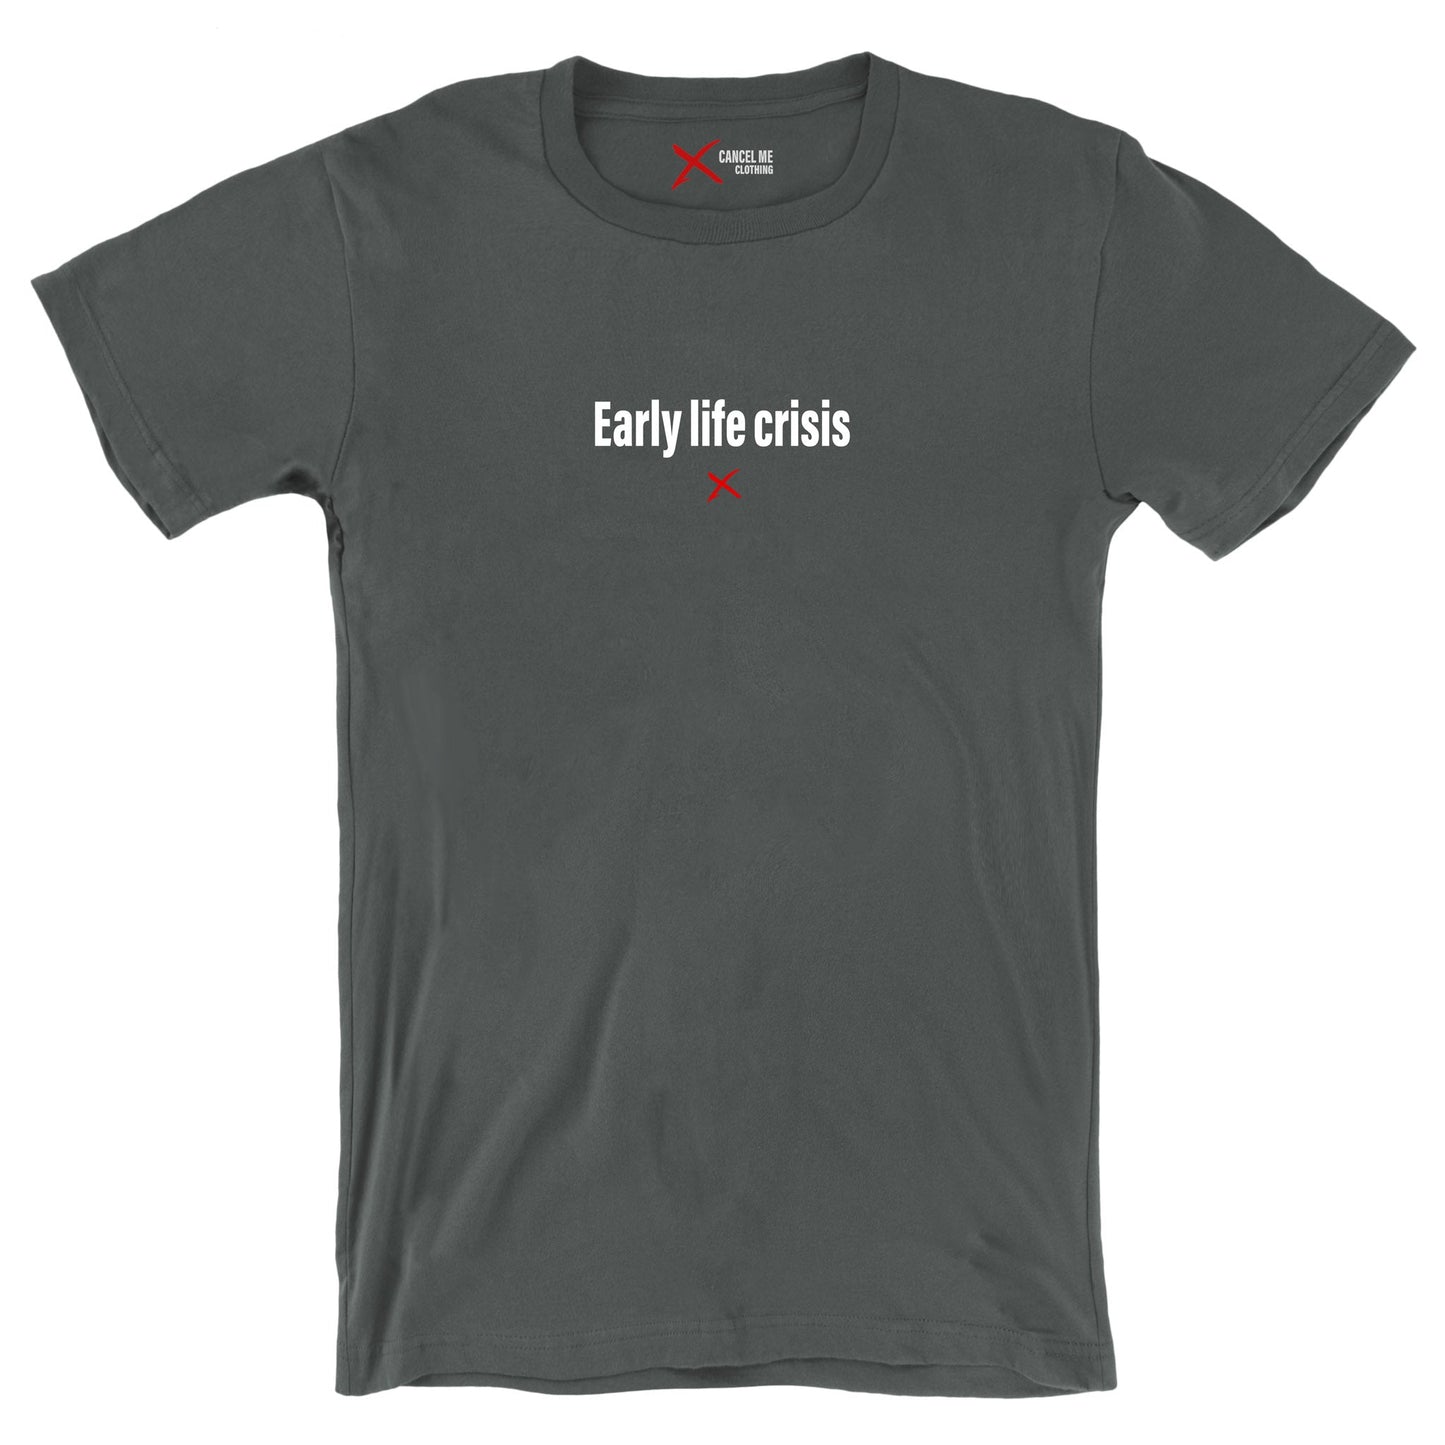 Early life crisis - Shirt